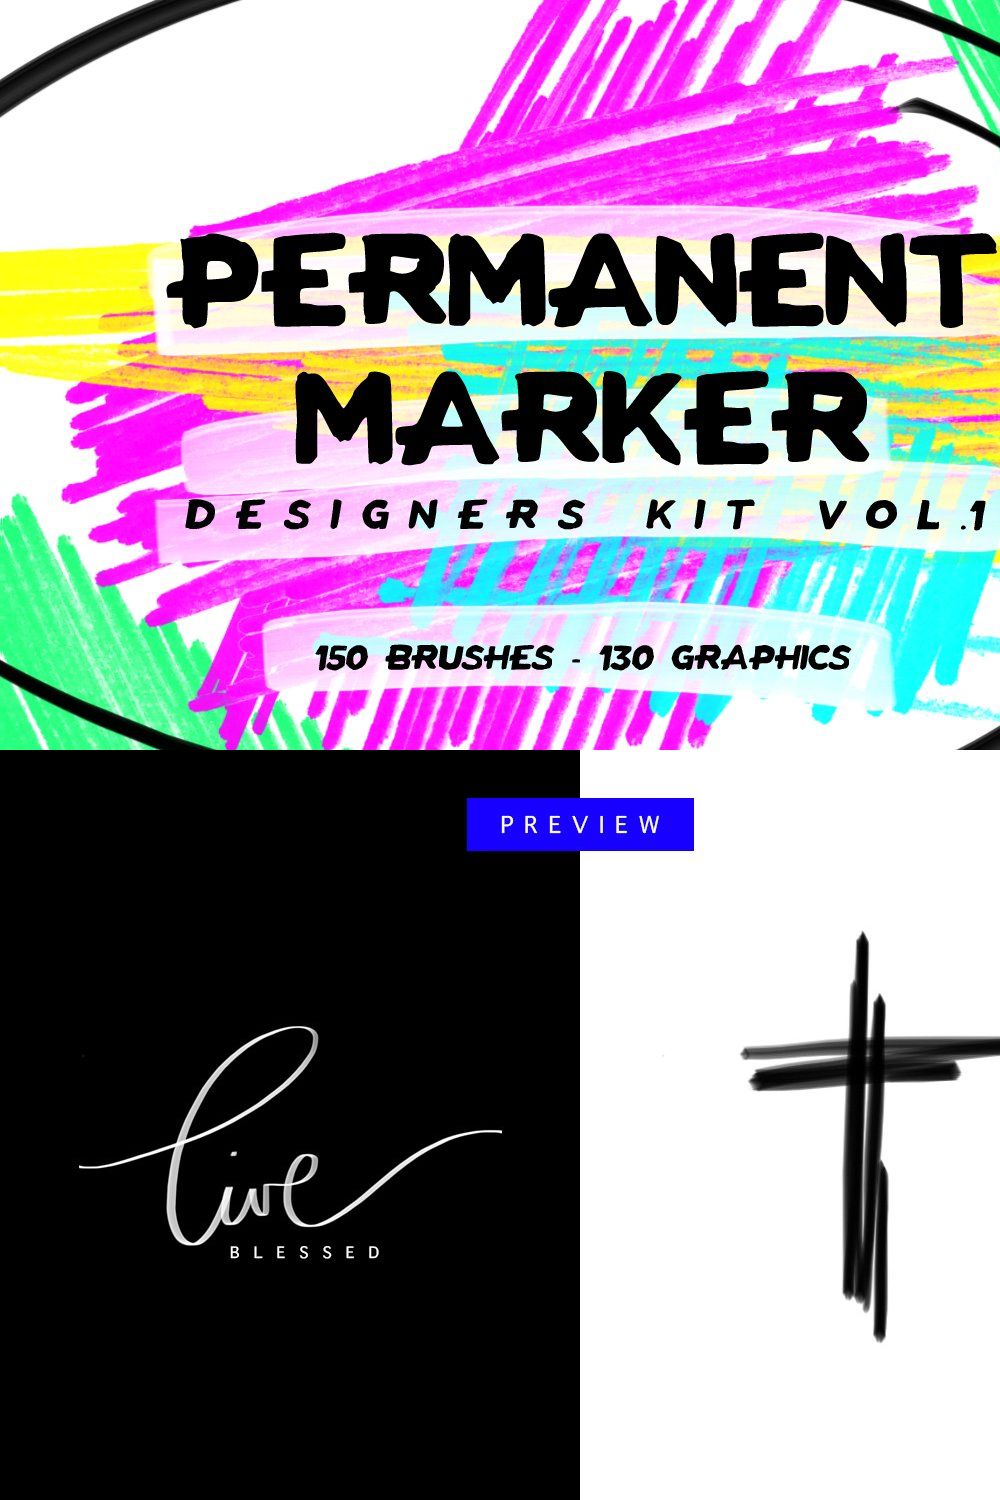 Permanent Marker Designers Kit Vol.1 pinterest preview image.